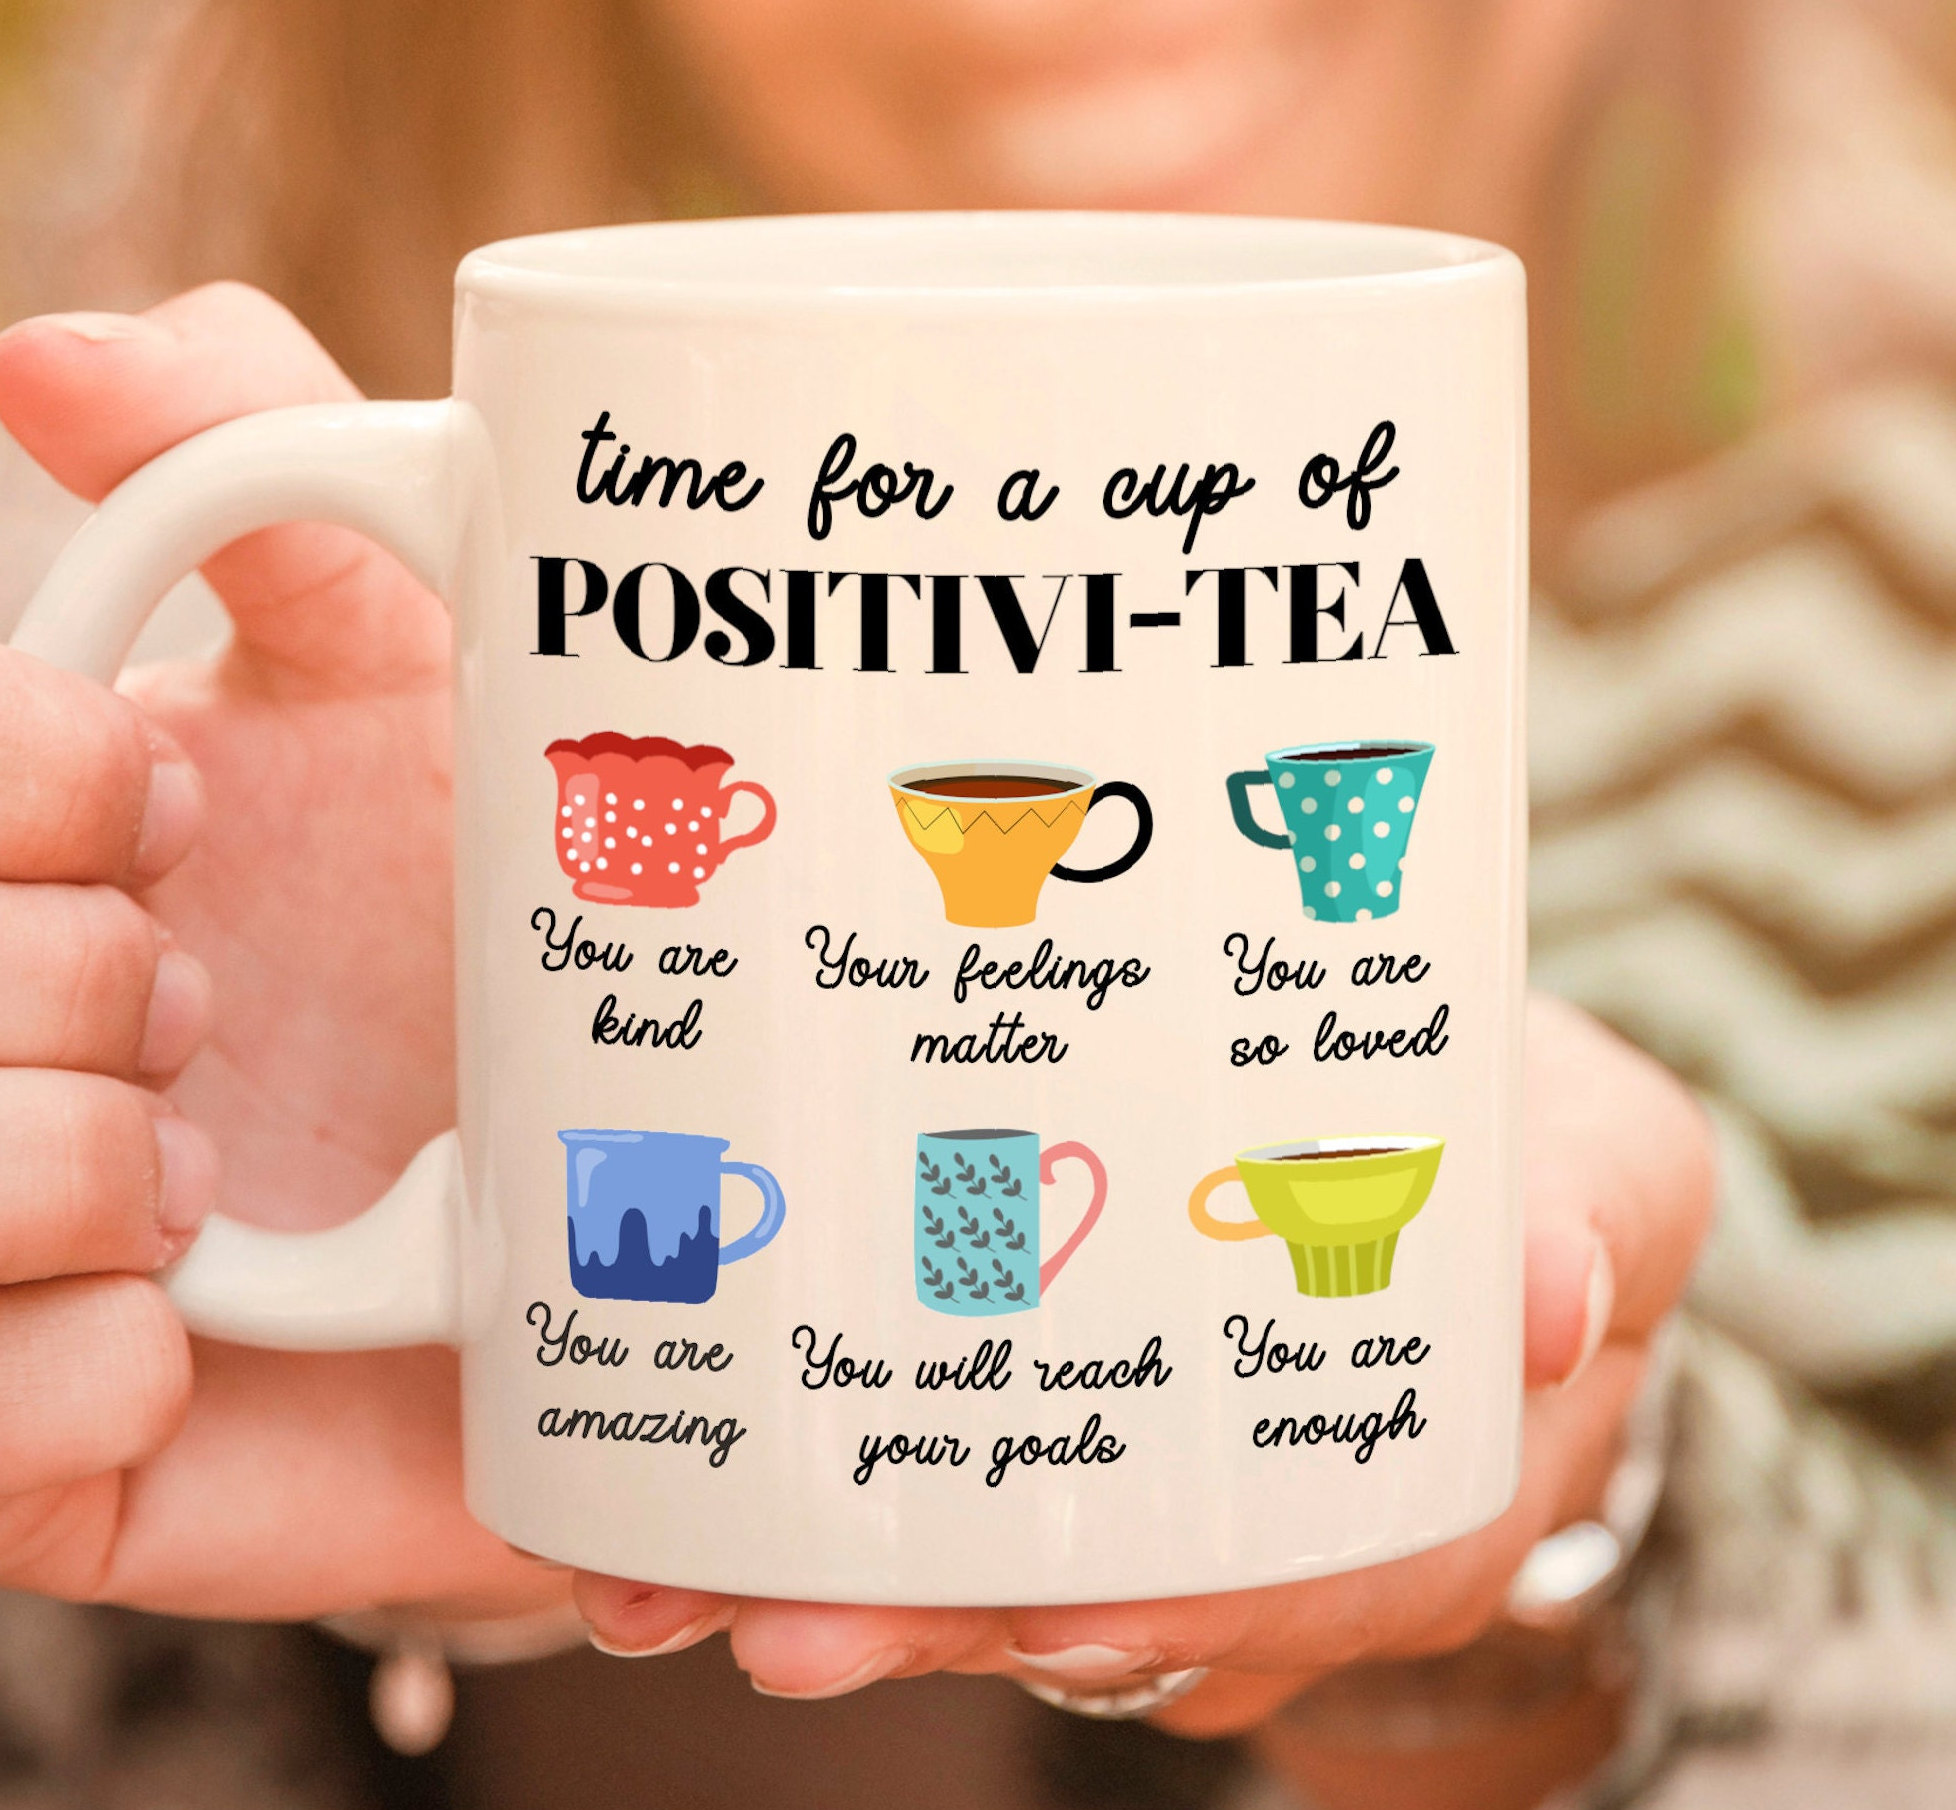 Time for a Cup of Positivi-tea Mug. Positive Mindset Gift, Motivational Mug.  Self Affirmation Tea Cup -  Canada